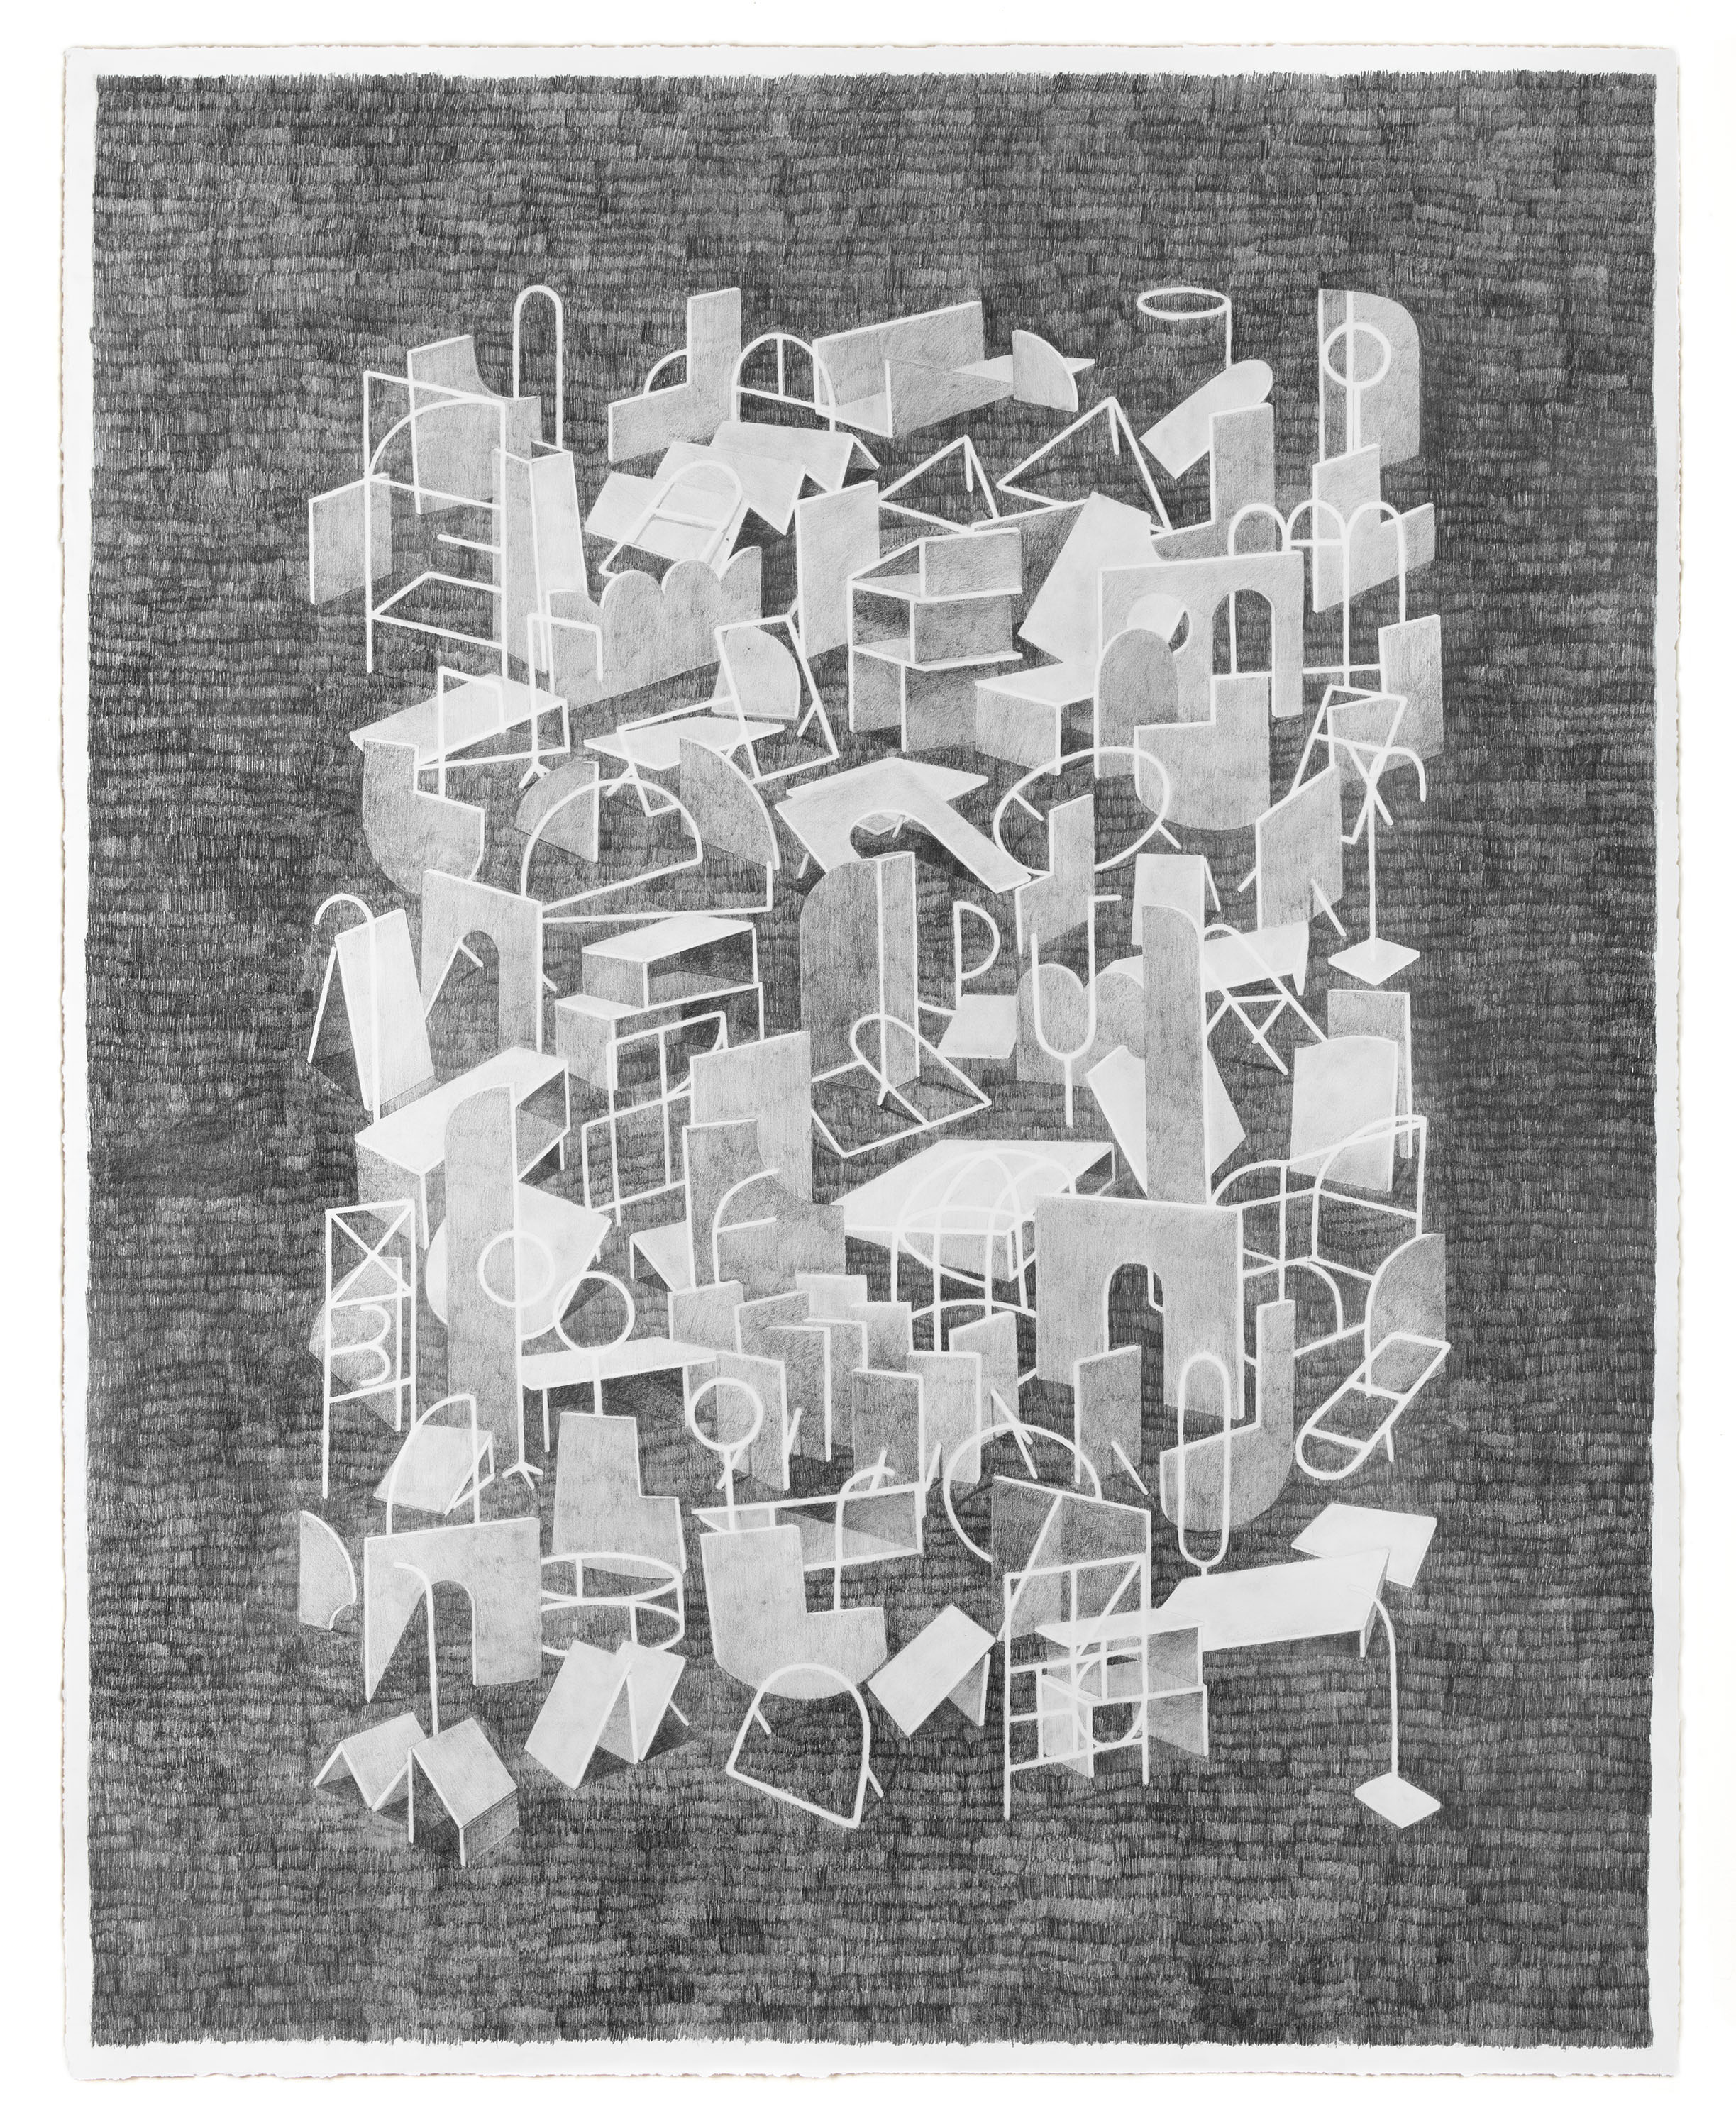 Kat Chamberlin, "Big Quarry" Graphite on Paper, 2017, 48 x 38